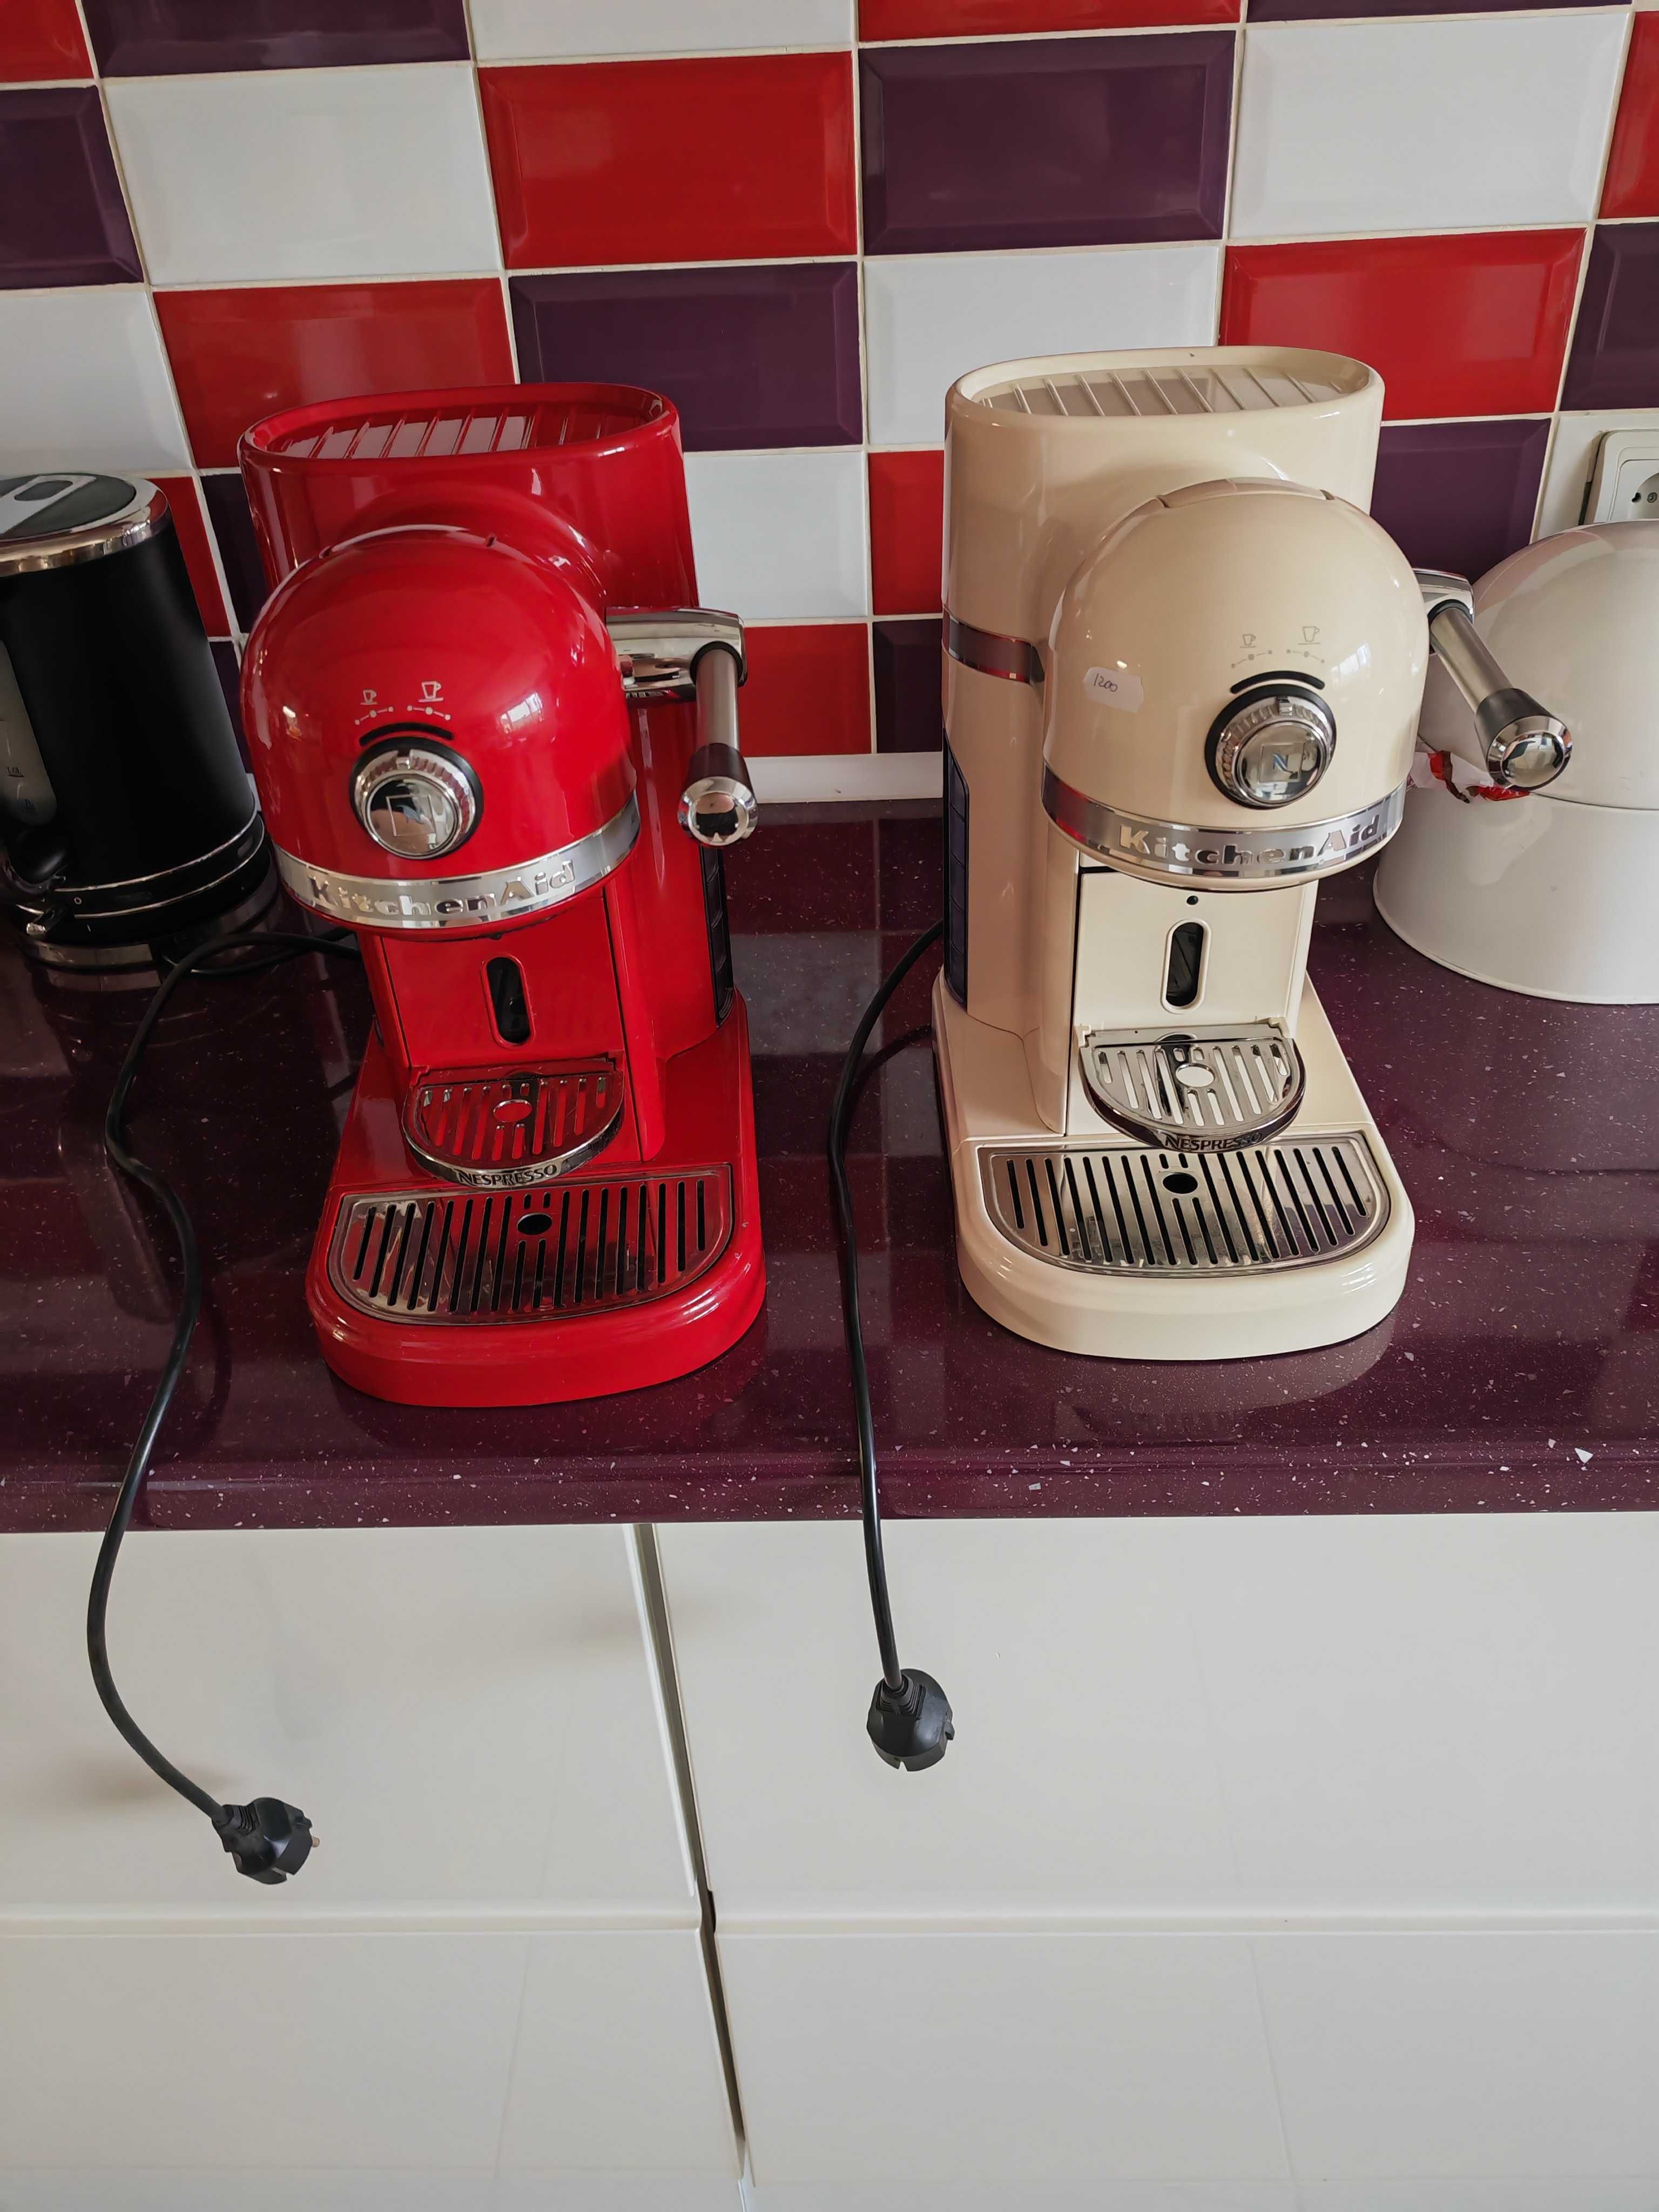 KitchenAid Nespresso Coffee Machine Almond Cream 5KES0504AAC